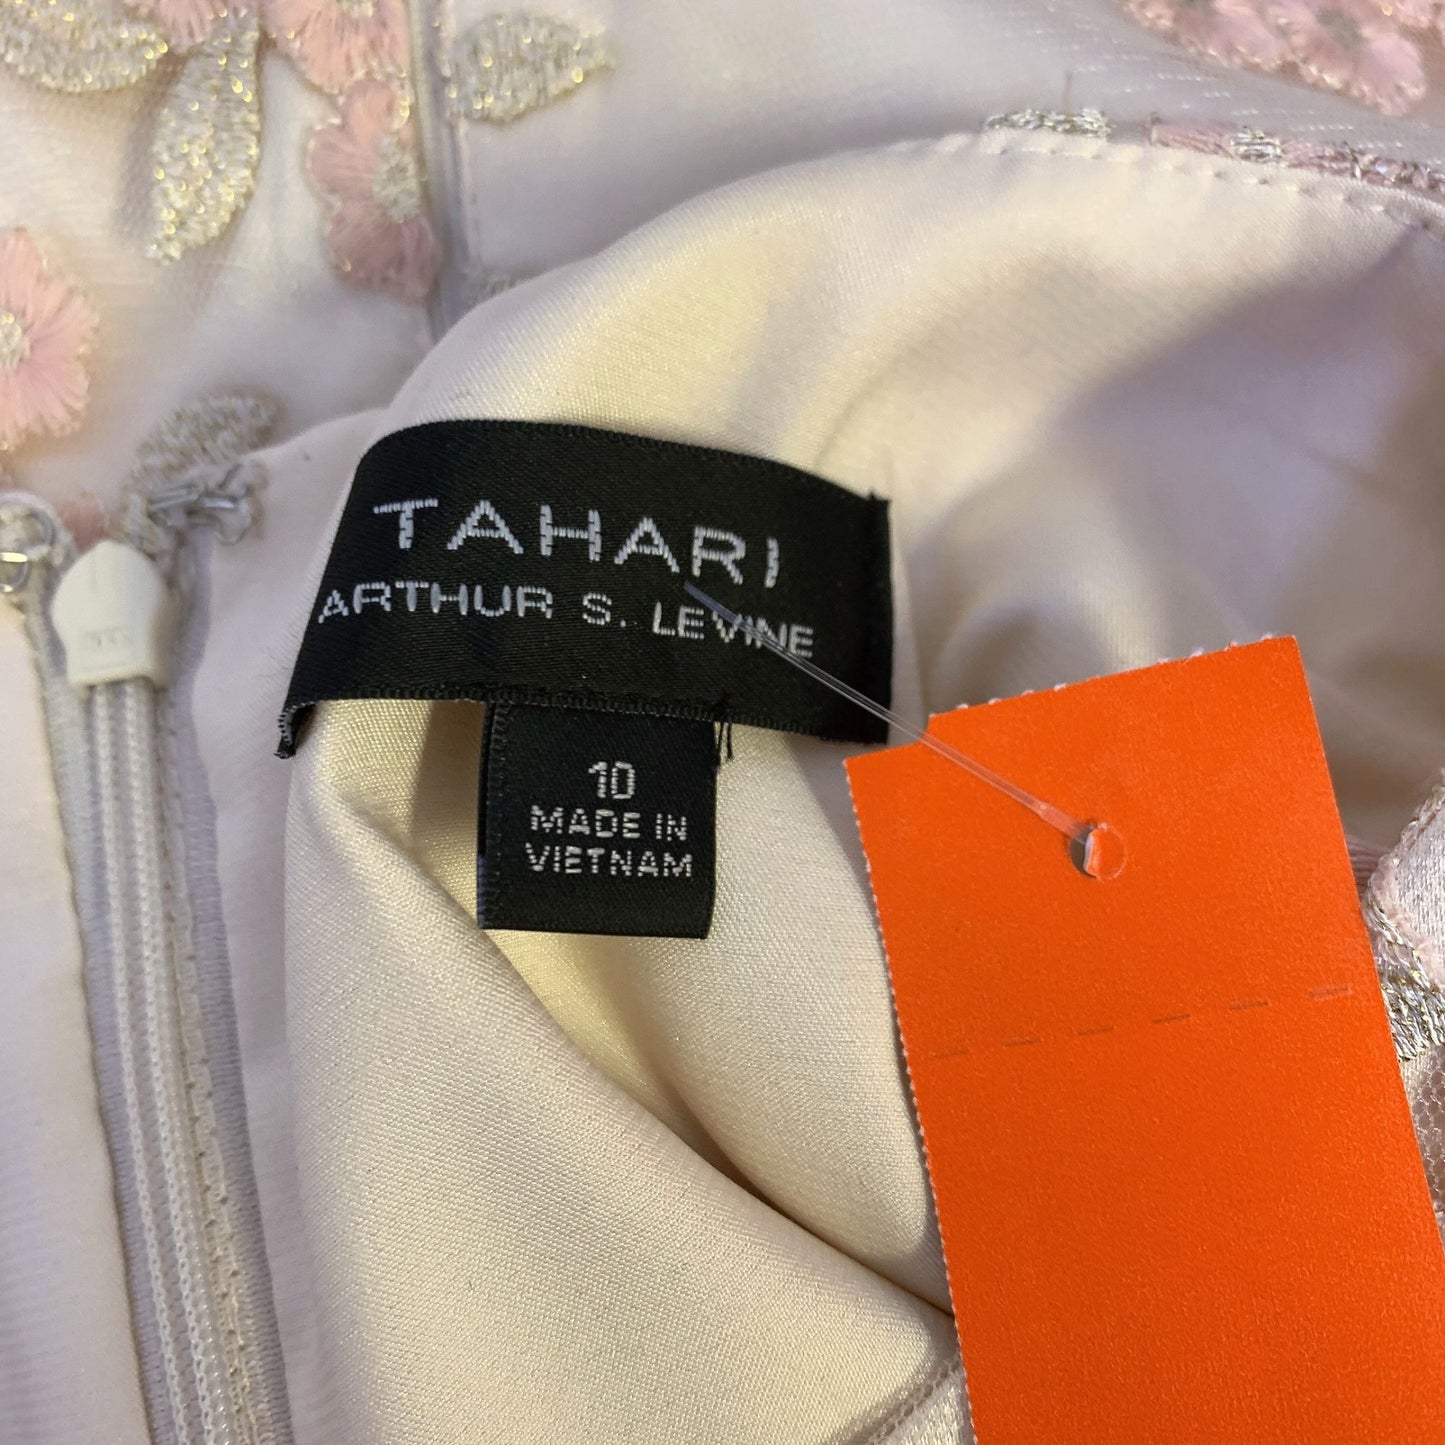 *Tahari Blush Pink Sheer Embroidered Overlay Dress Size 10